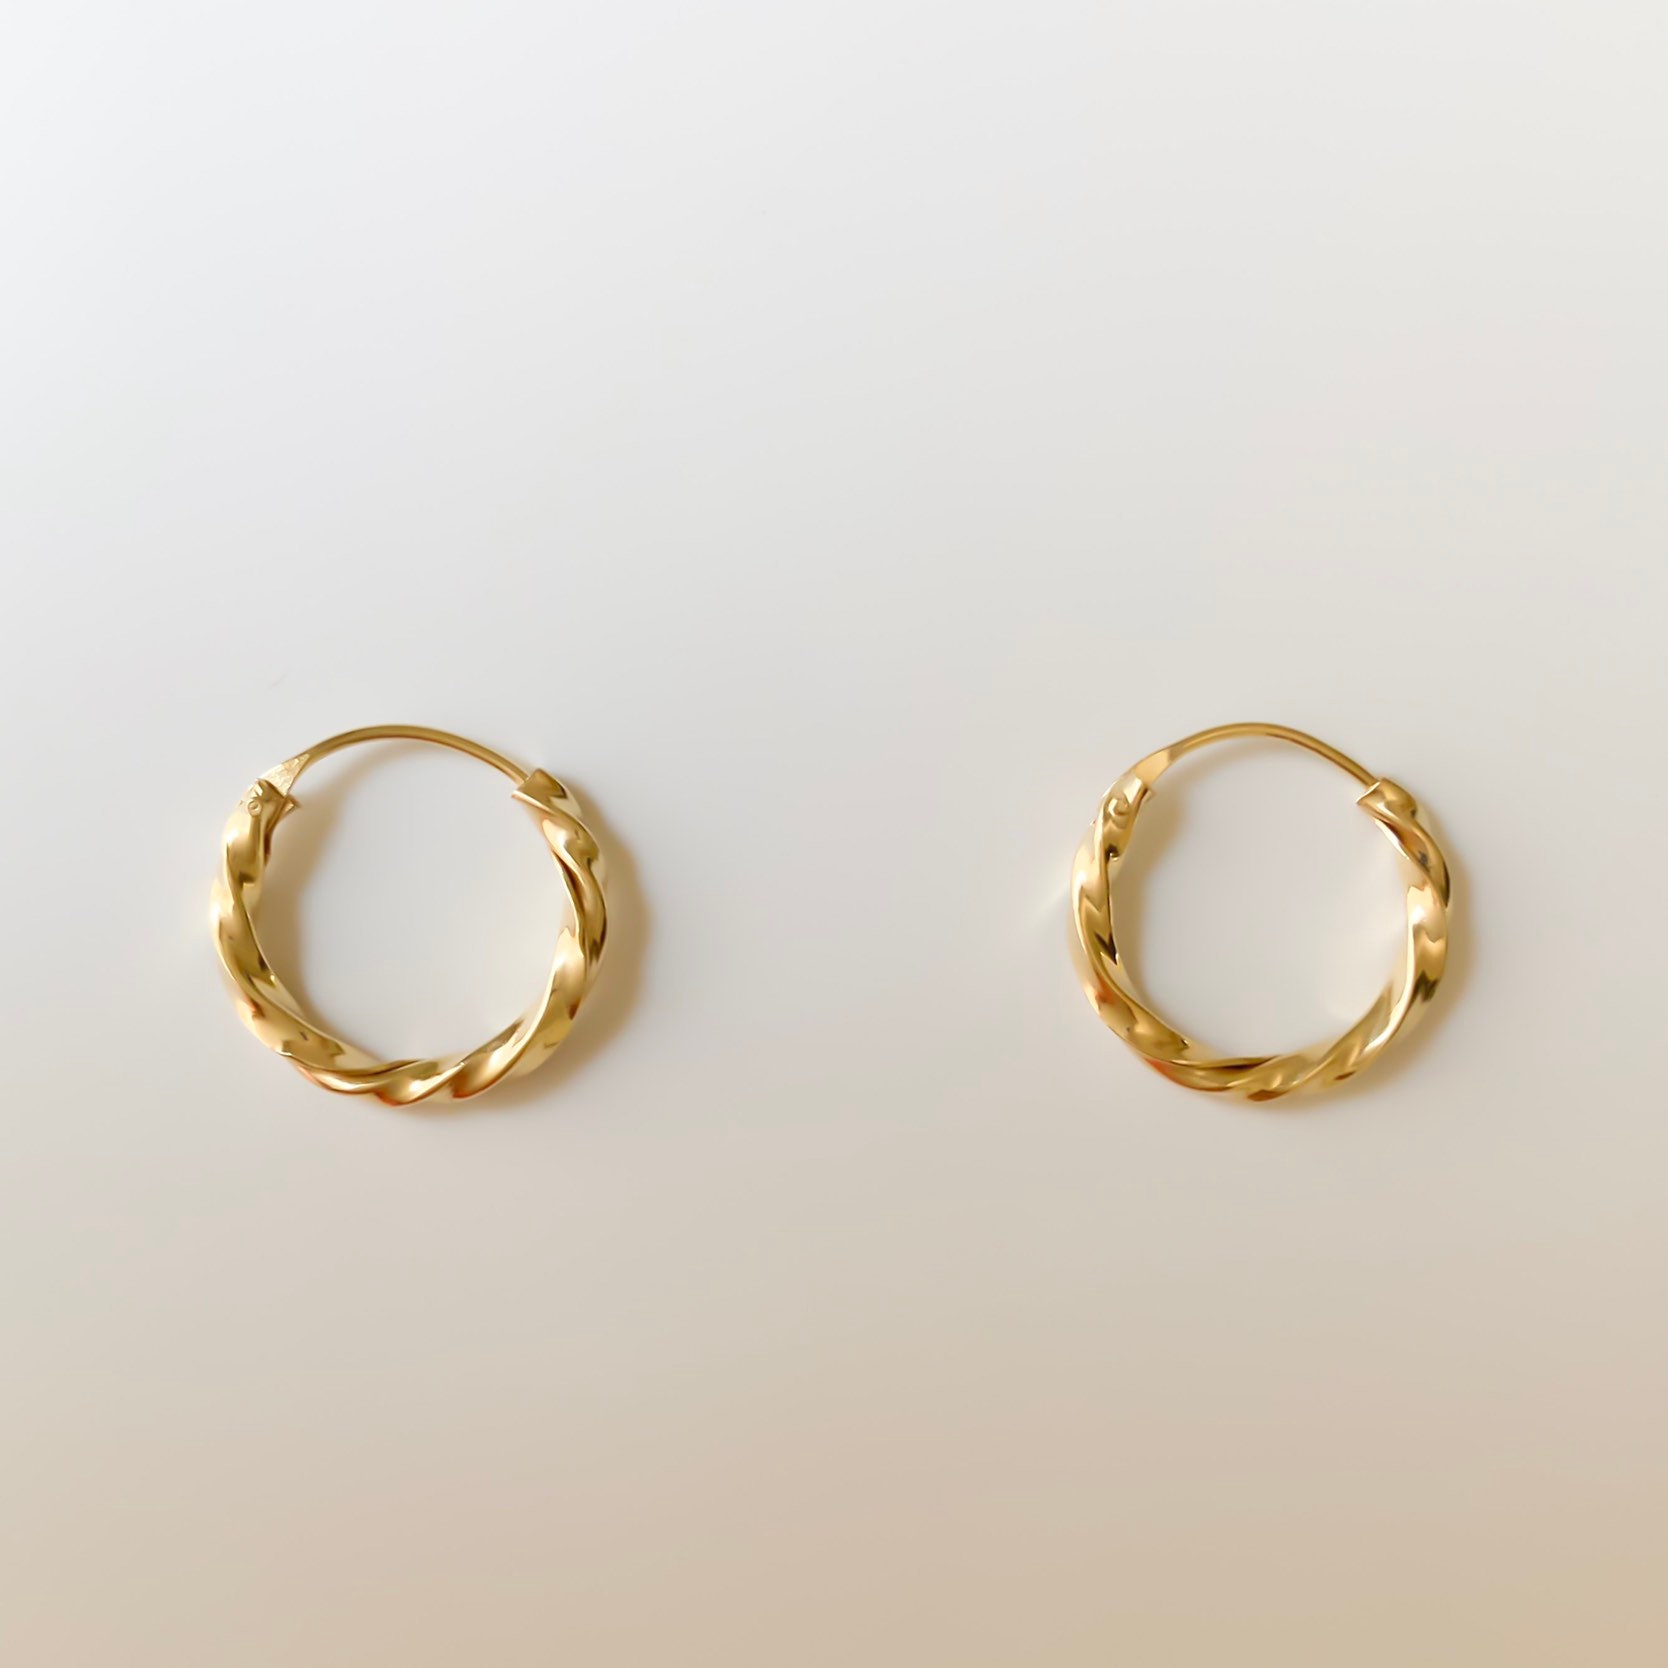 Gold Hoop Earrings Gold Earrings Hoops Statement Earrings for | Etsy